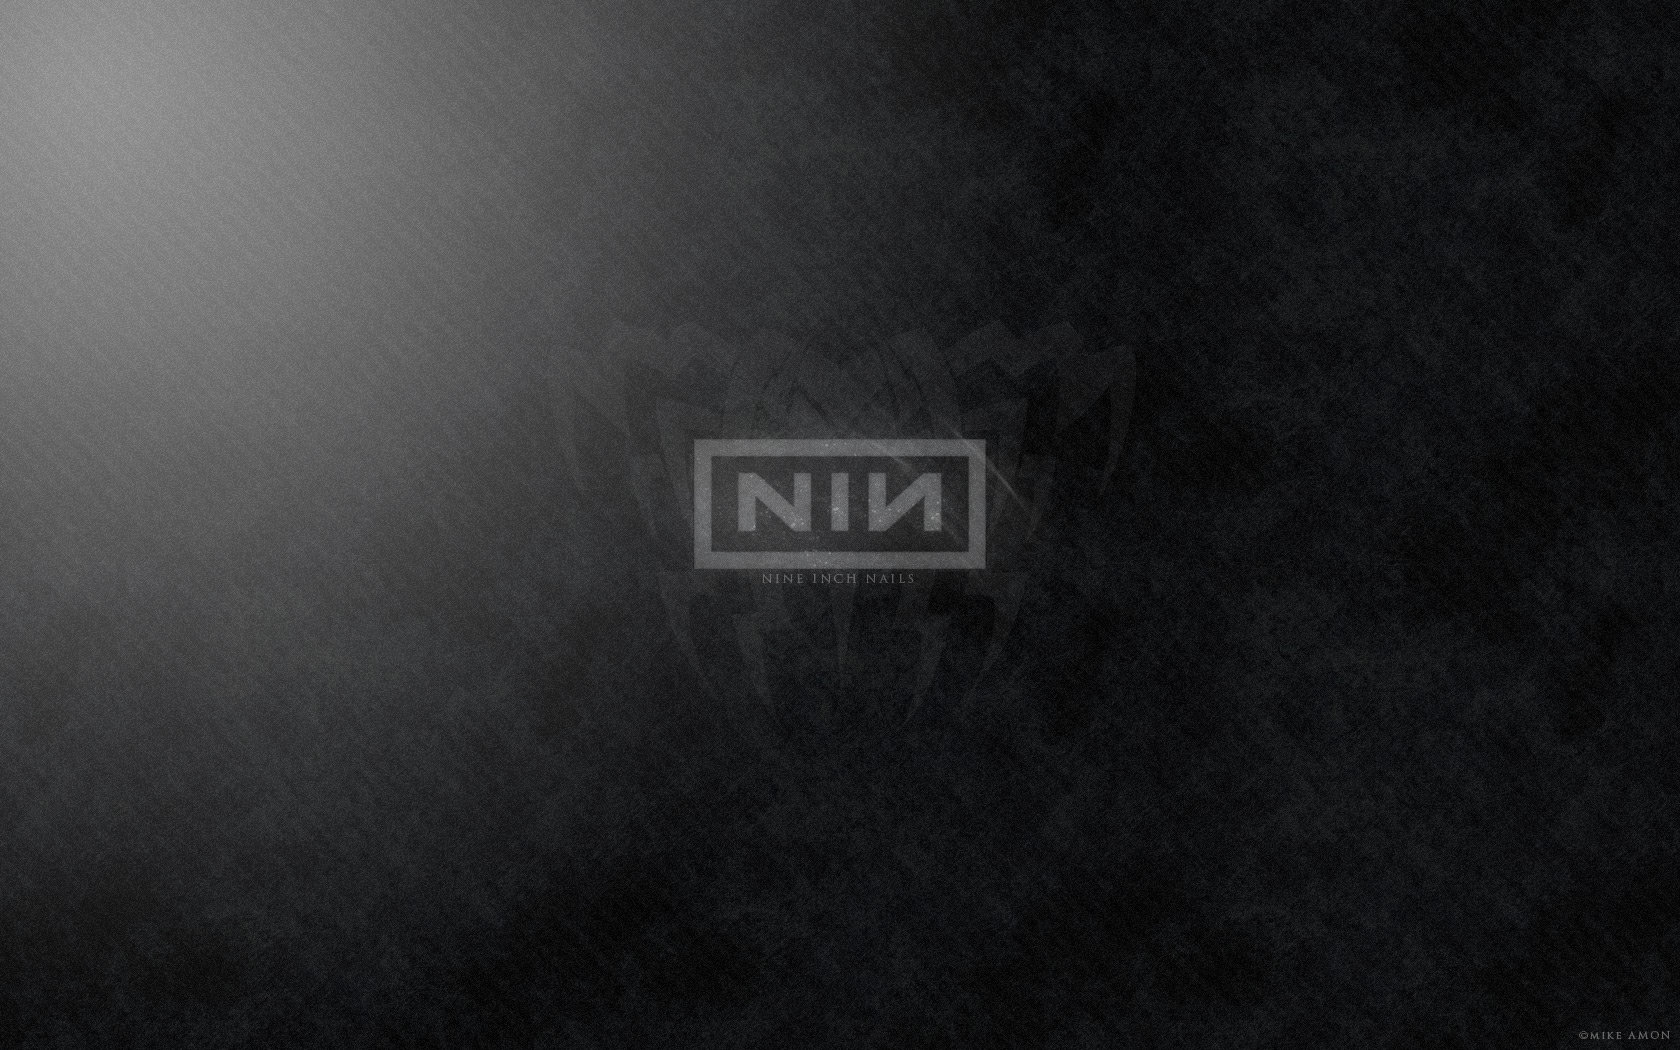 Nin Nine Inch Nails Wallpape By Gunkl